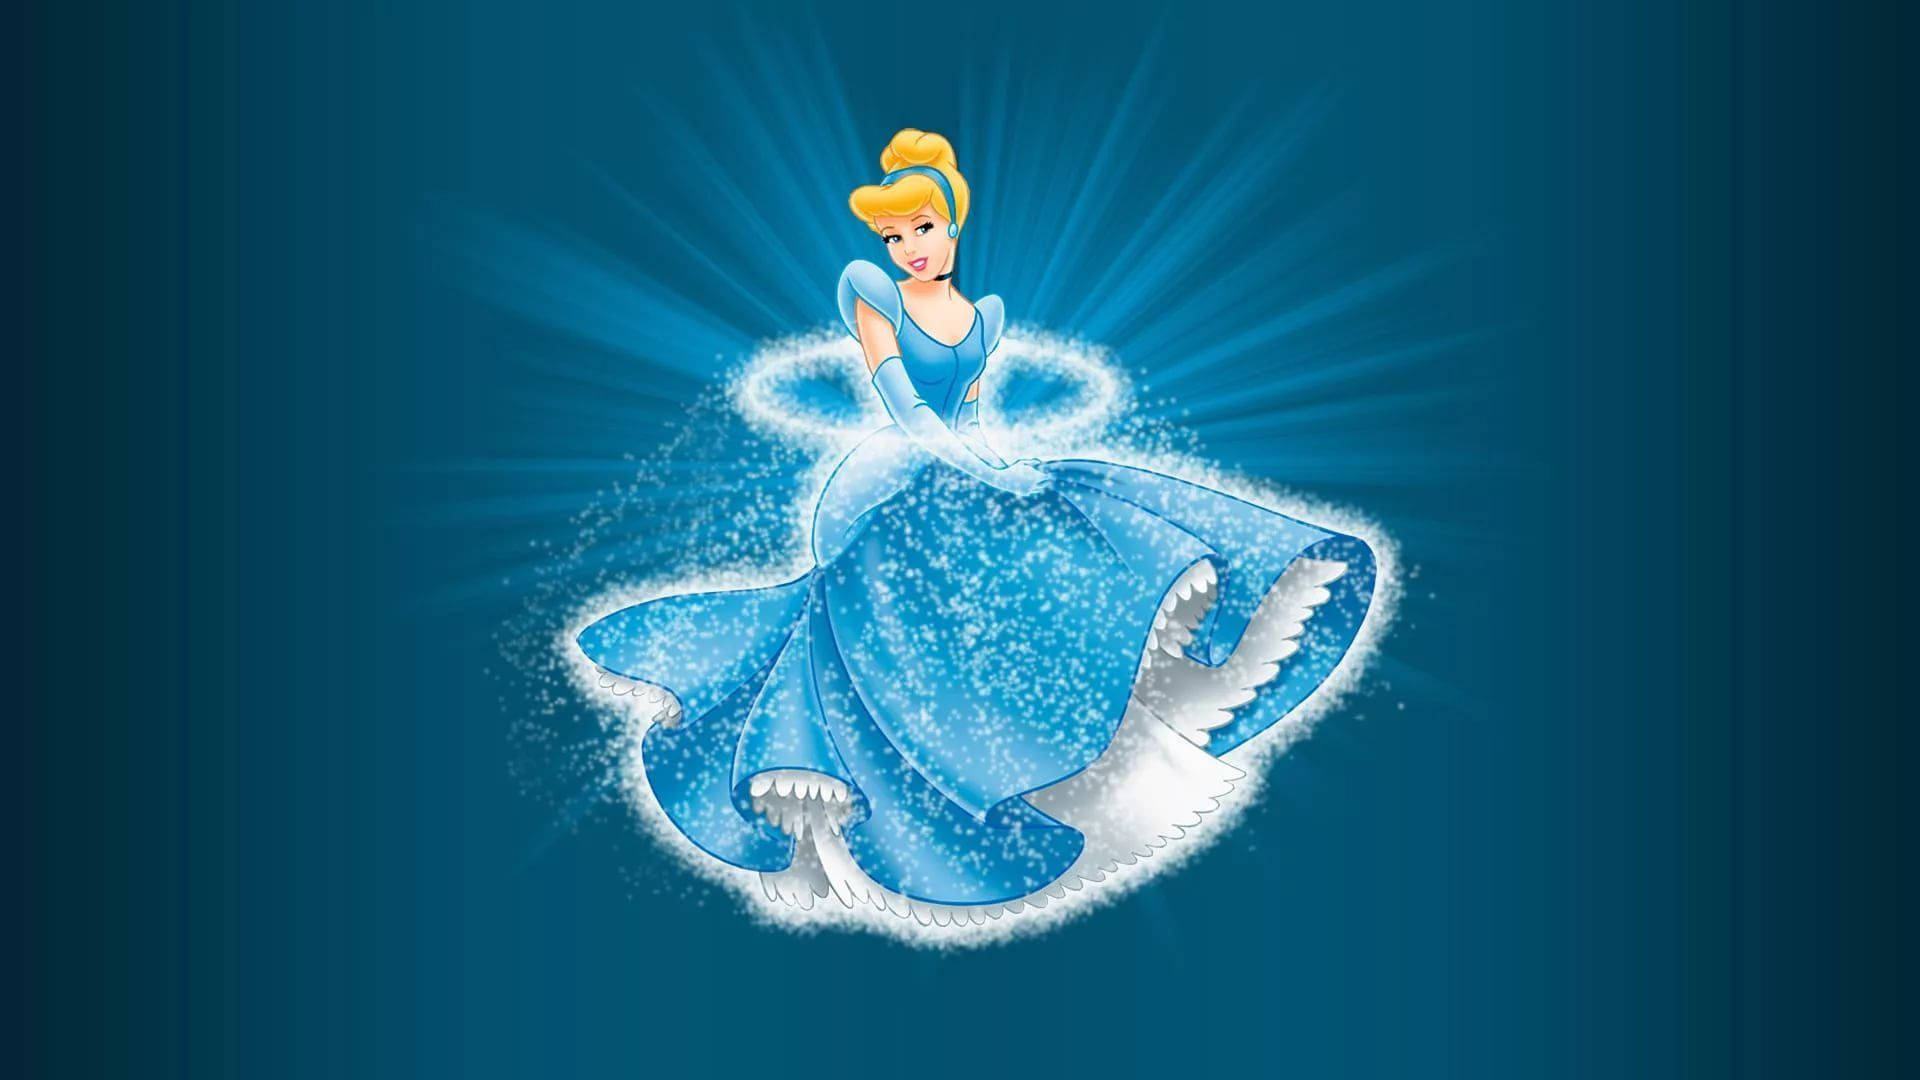 Sparkling Cinderella Illustration